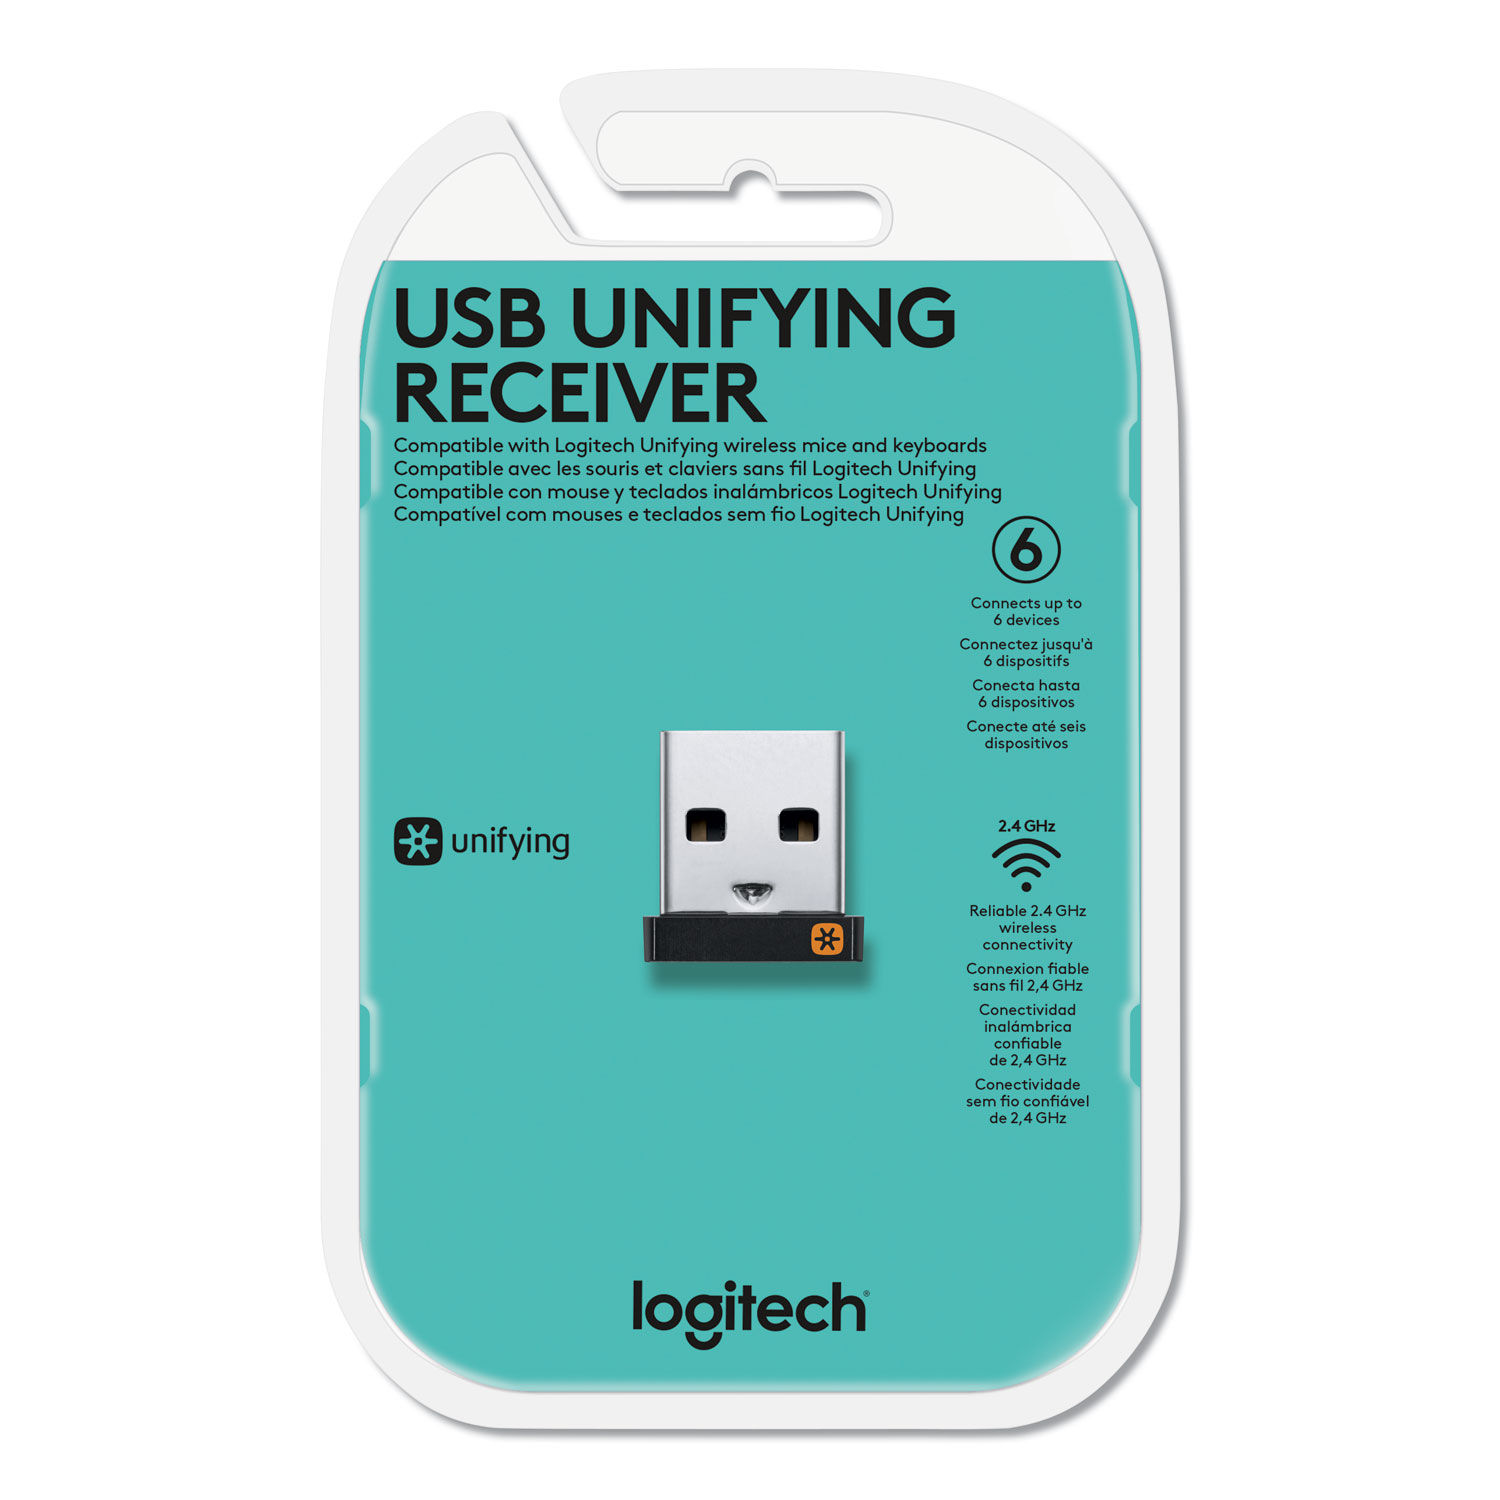 USB Unifying Receiver by Logitech® | OnTimeSupplies.com